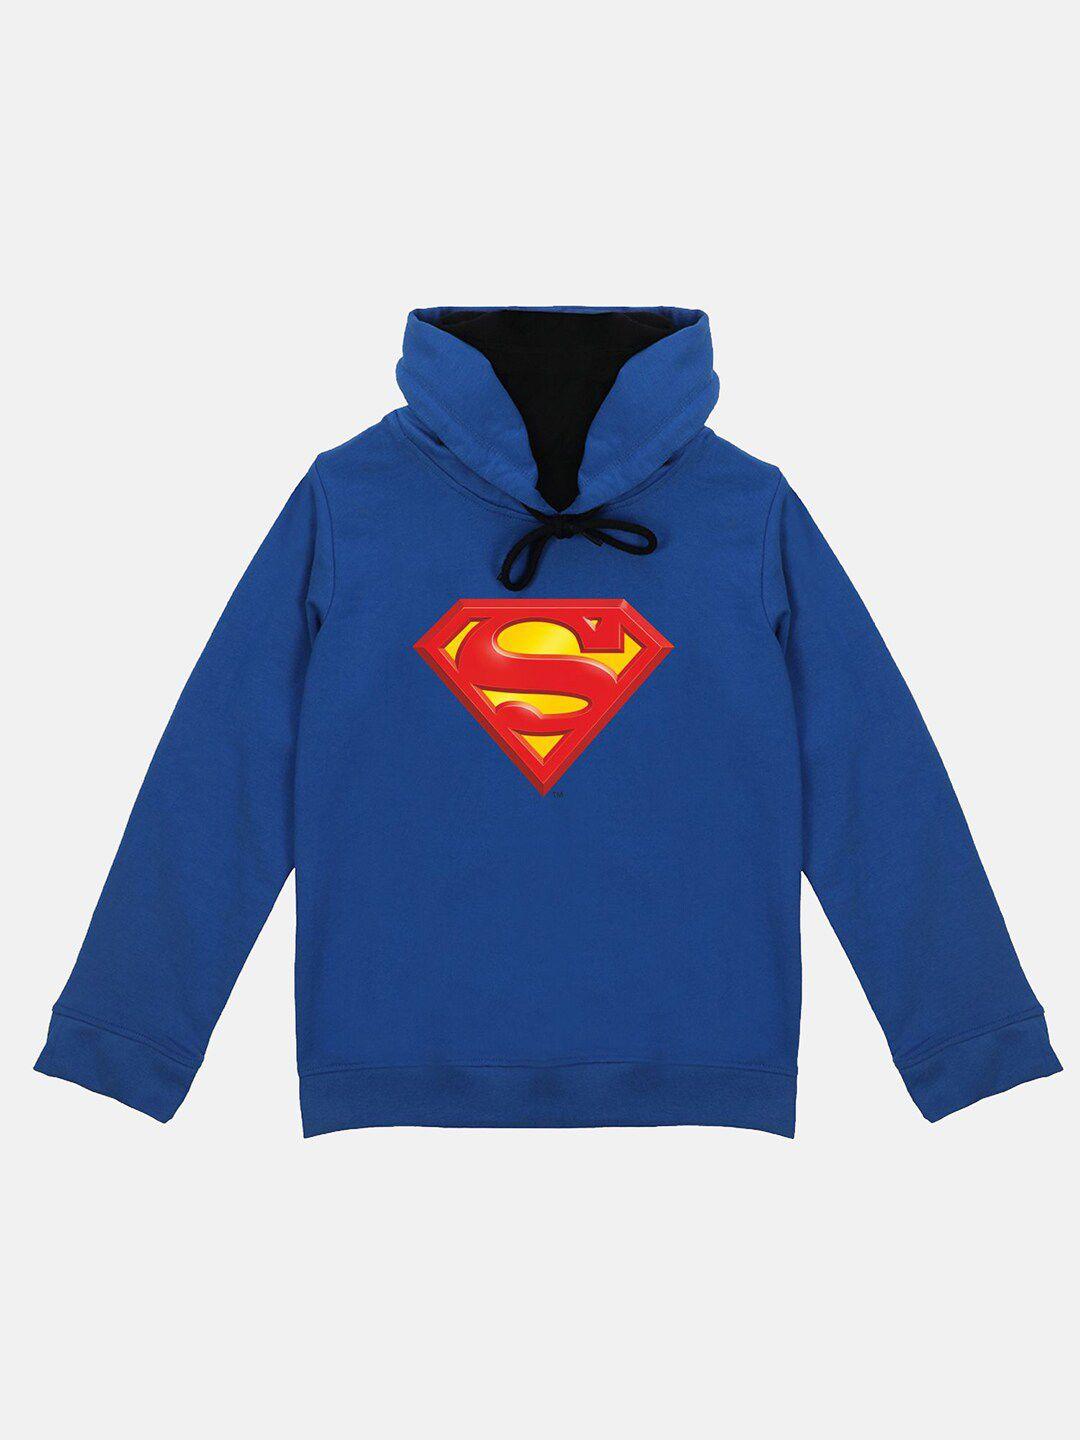 dc by wear your mind unisex kids blue printed hooded sweatshirt